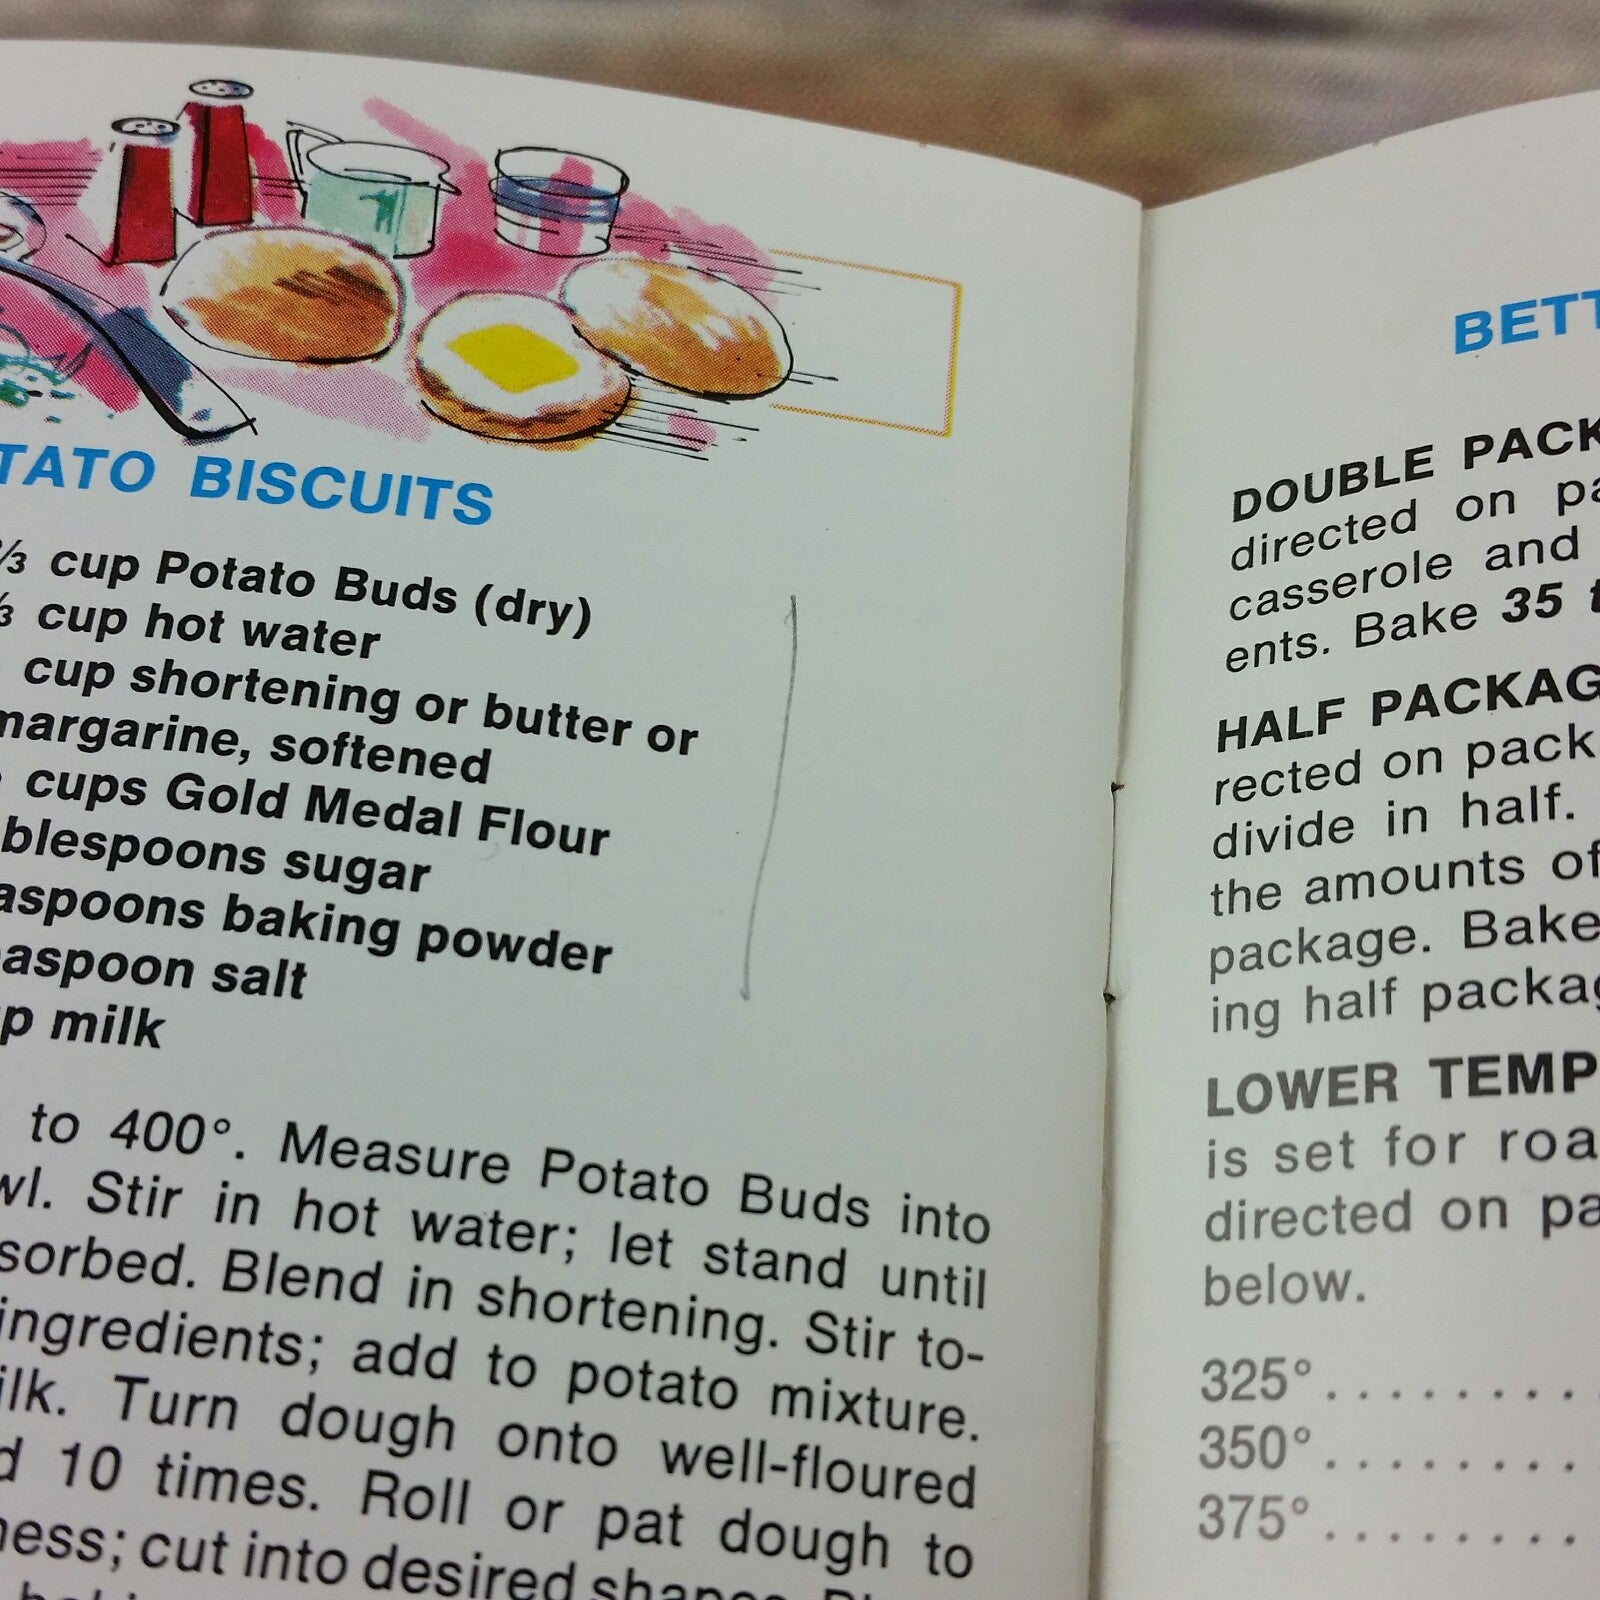 Vintage Cookbook 42 Hot Potato Ideas Betty Crocker Booklet 1970 - At Grandma's Table